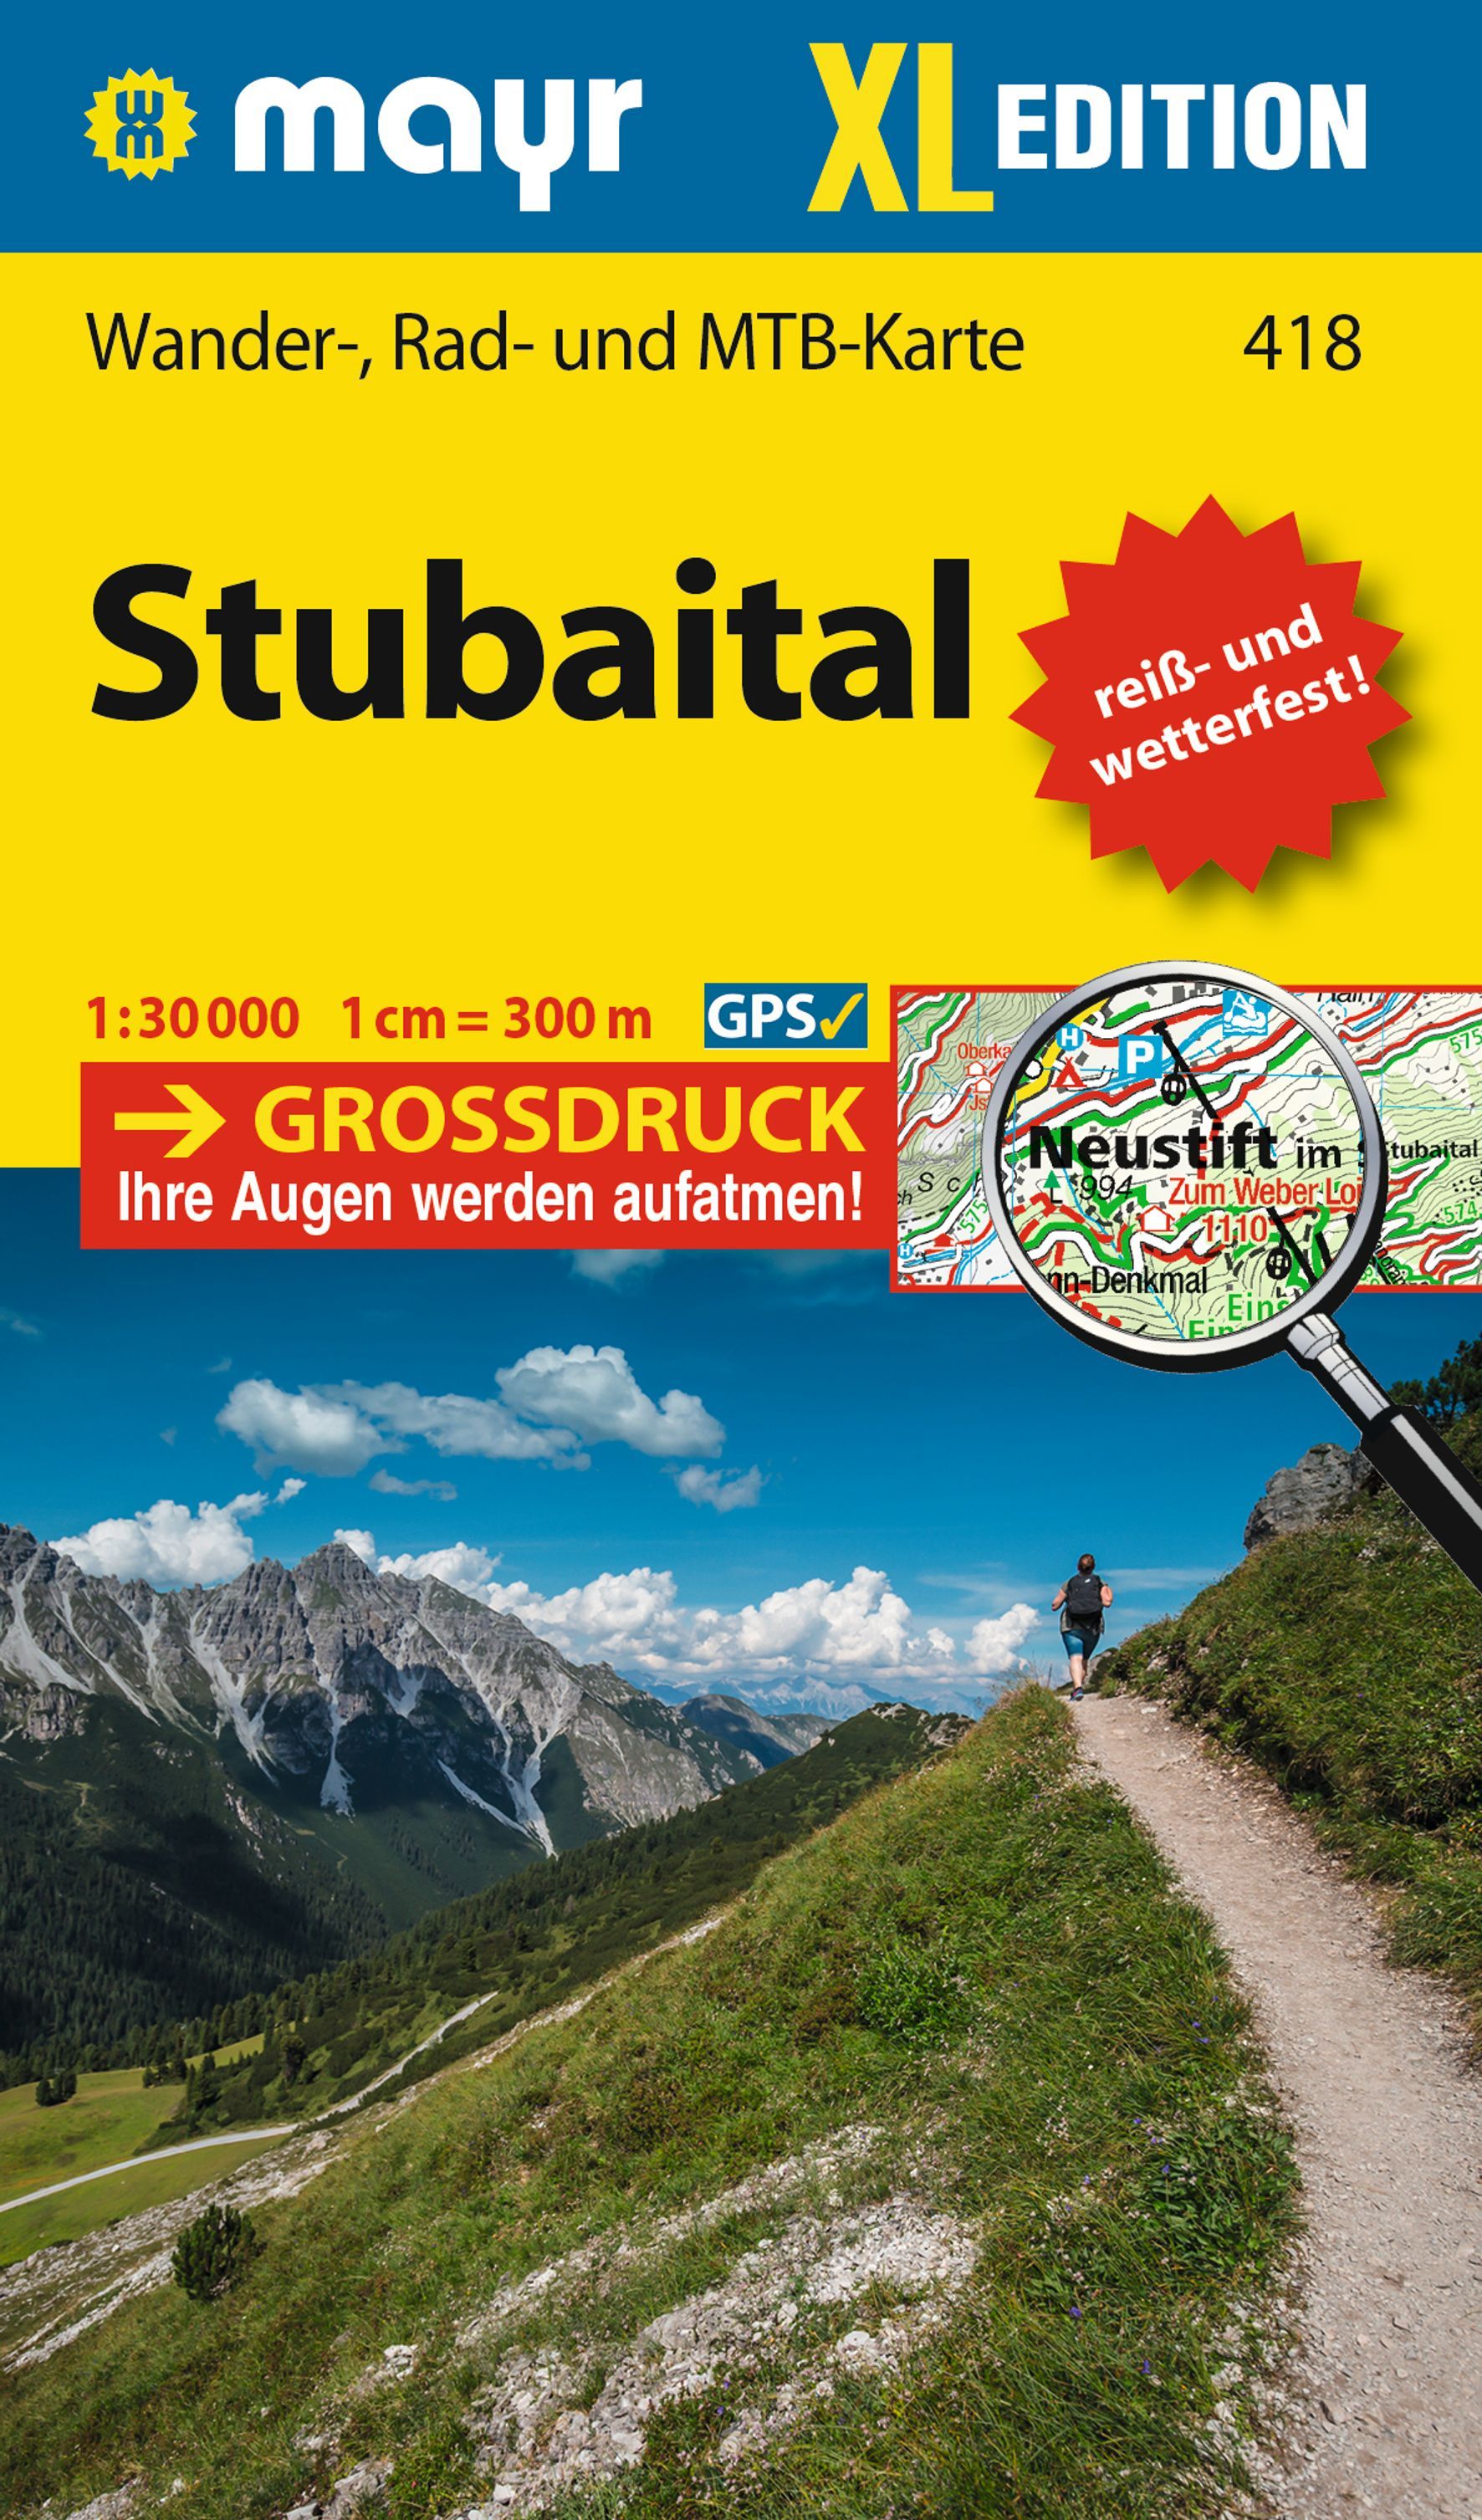 Online bestellen: Wandelkaart - Fietskaart 418 Stubaital XL | Mayr